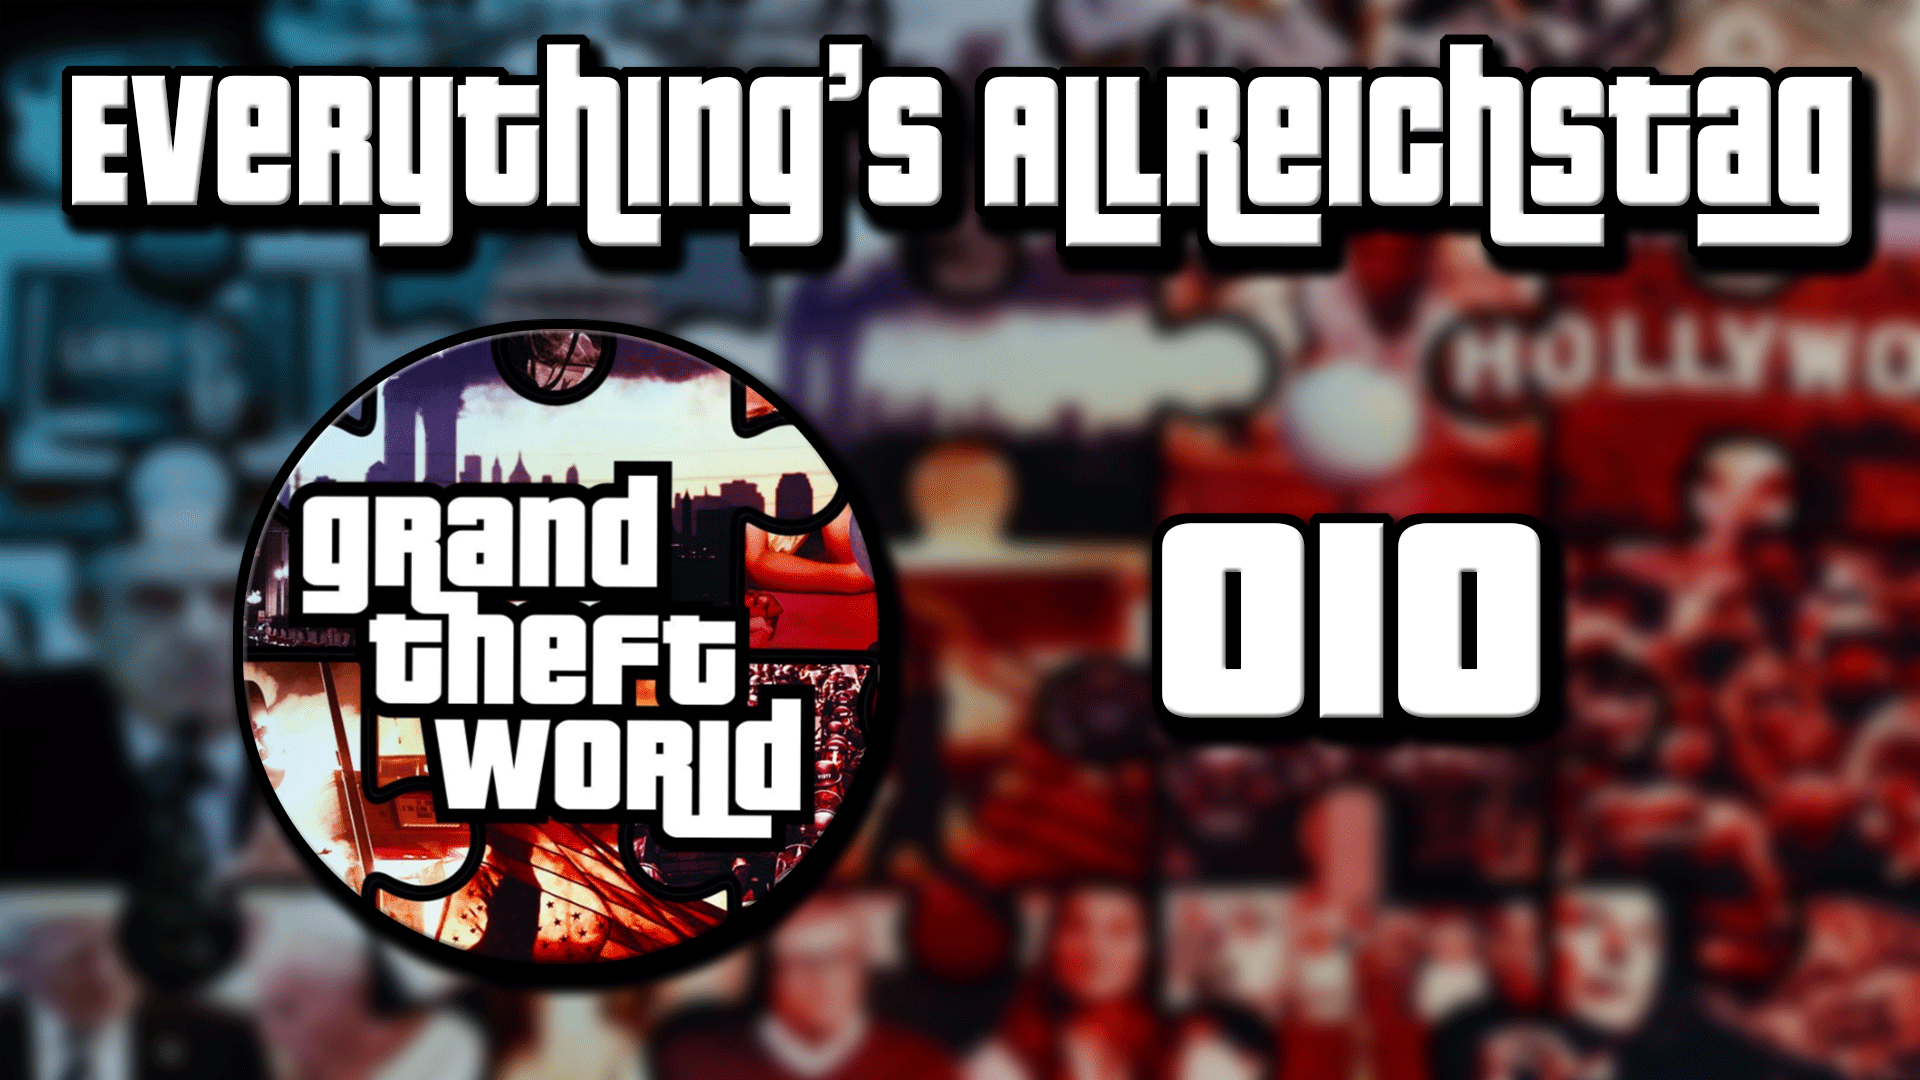 Grand Theft World Podcast 010 | Everything’s allReichstag